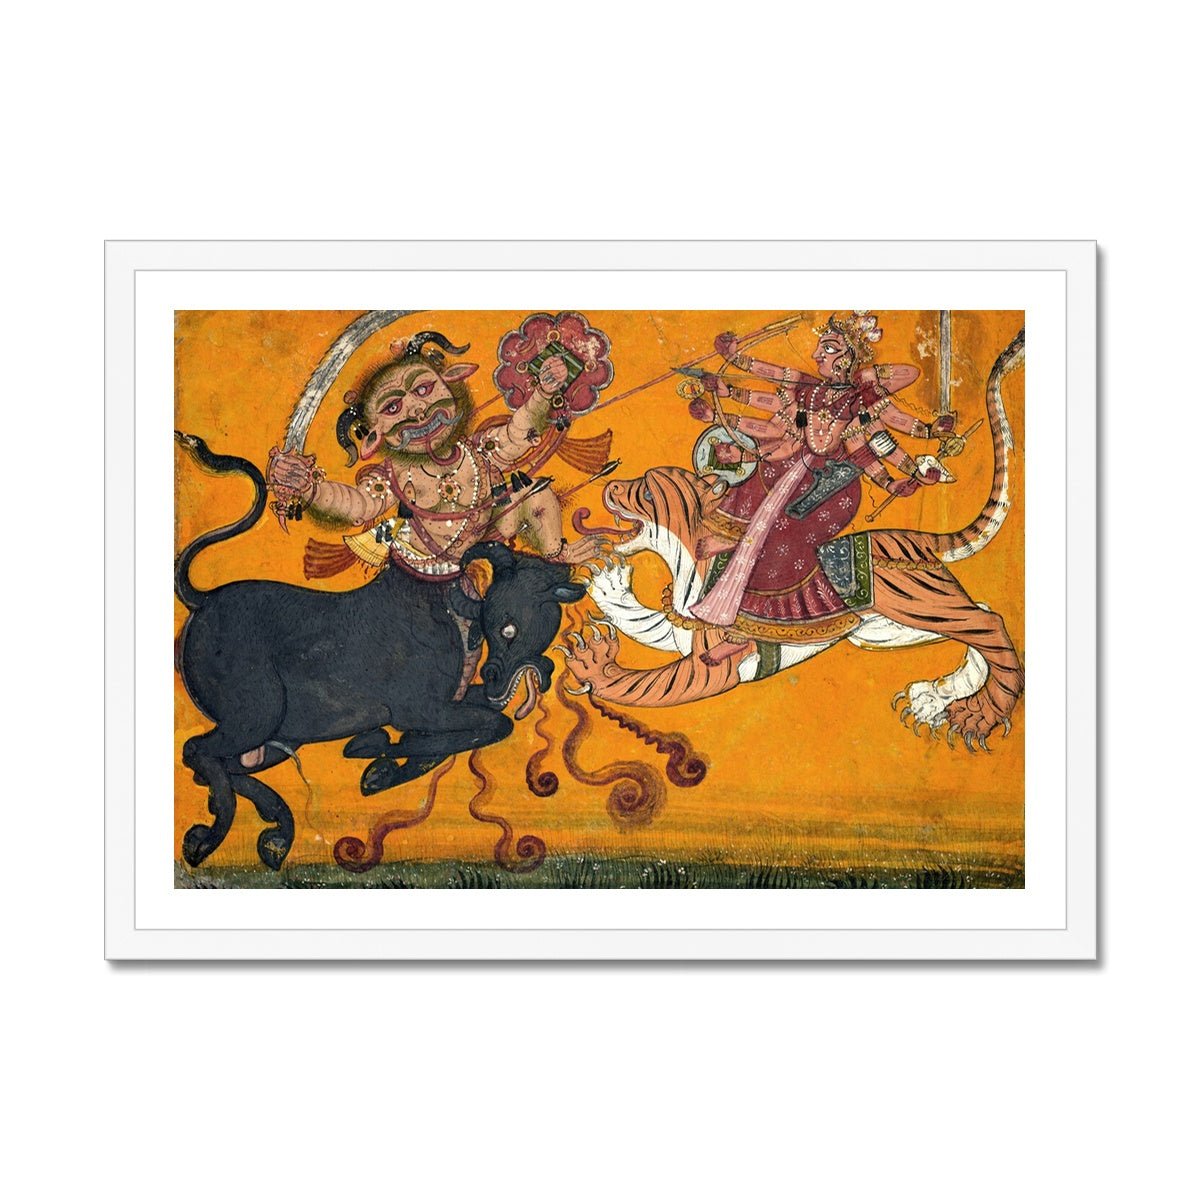 Fine art A4 Landscape / White Frame Durga Slaying Mahisha: Feminine Strength & Empowerment Deity | Powerful Woman Protector Goddess Framed Art Print